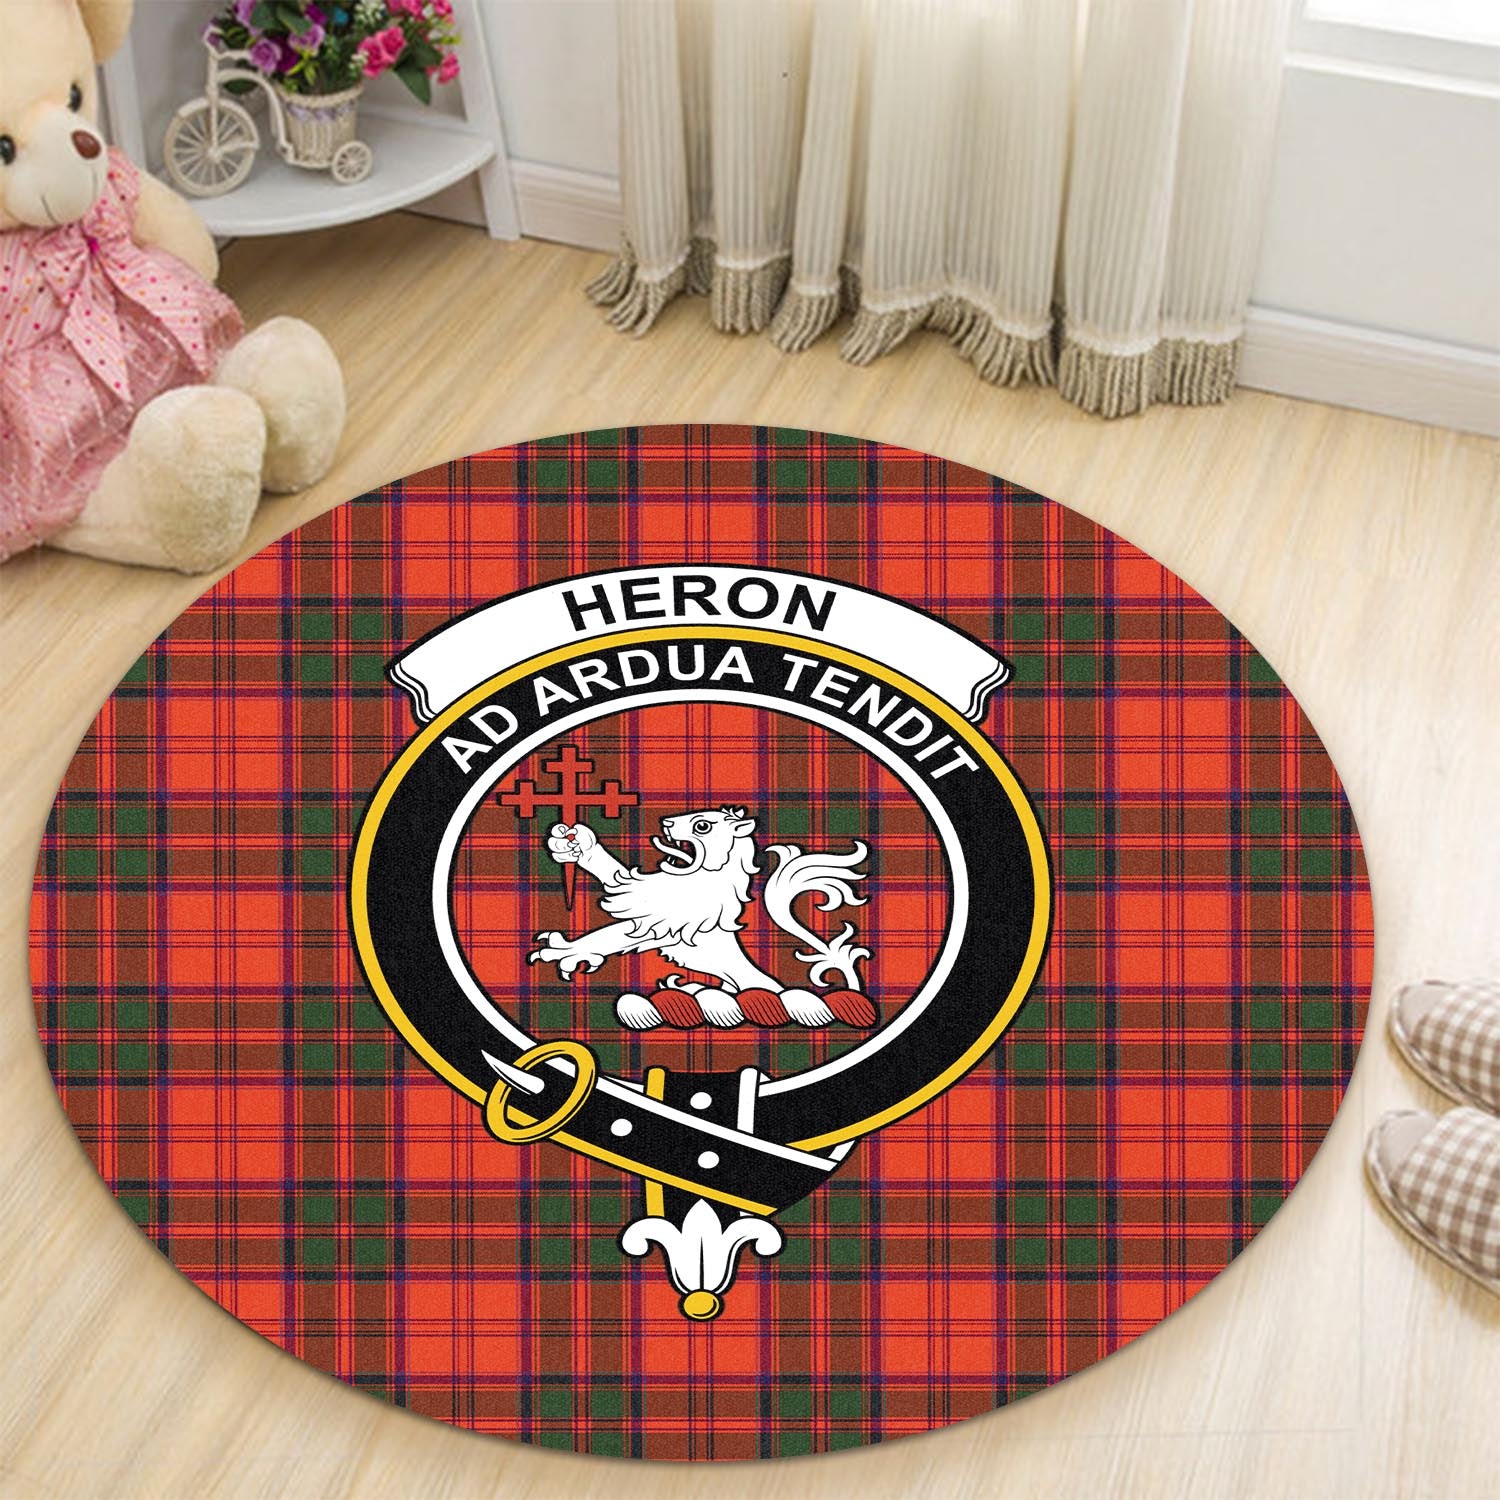 heron-tartan-round-rug-with-family-crest